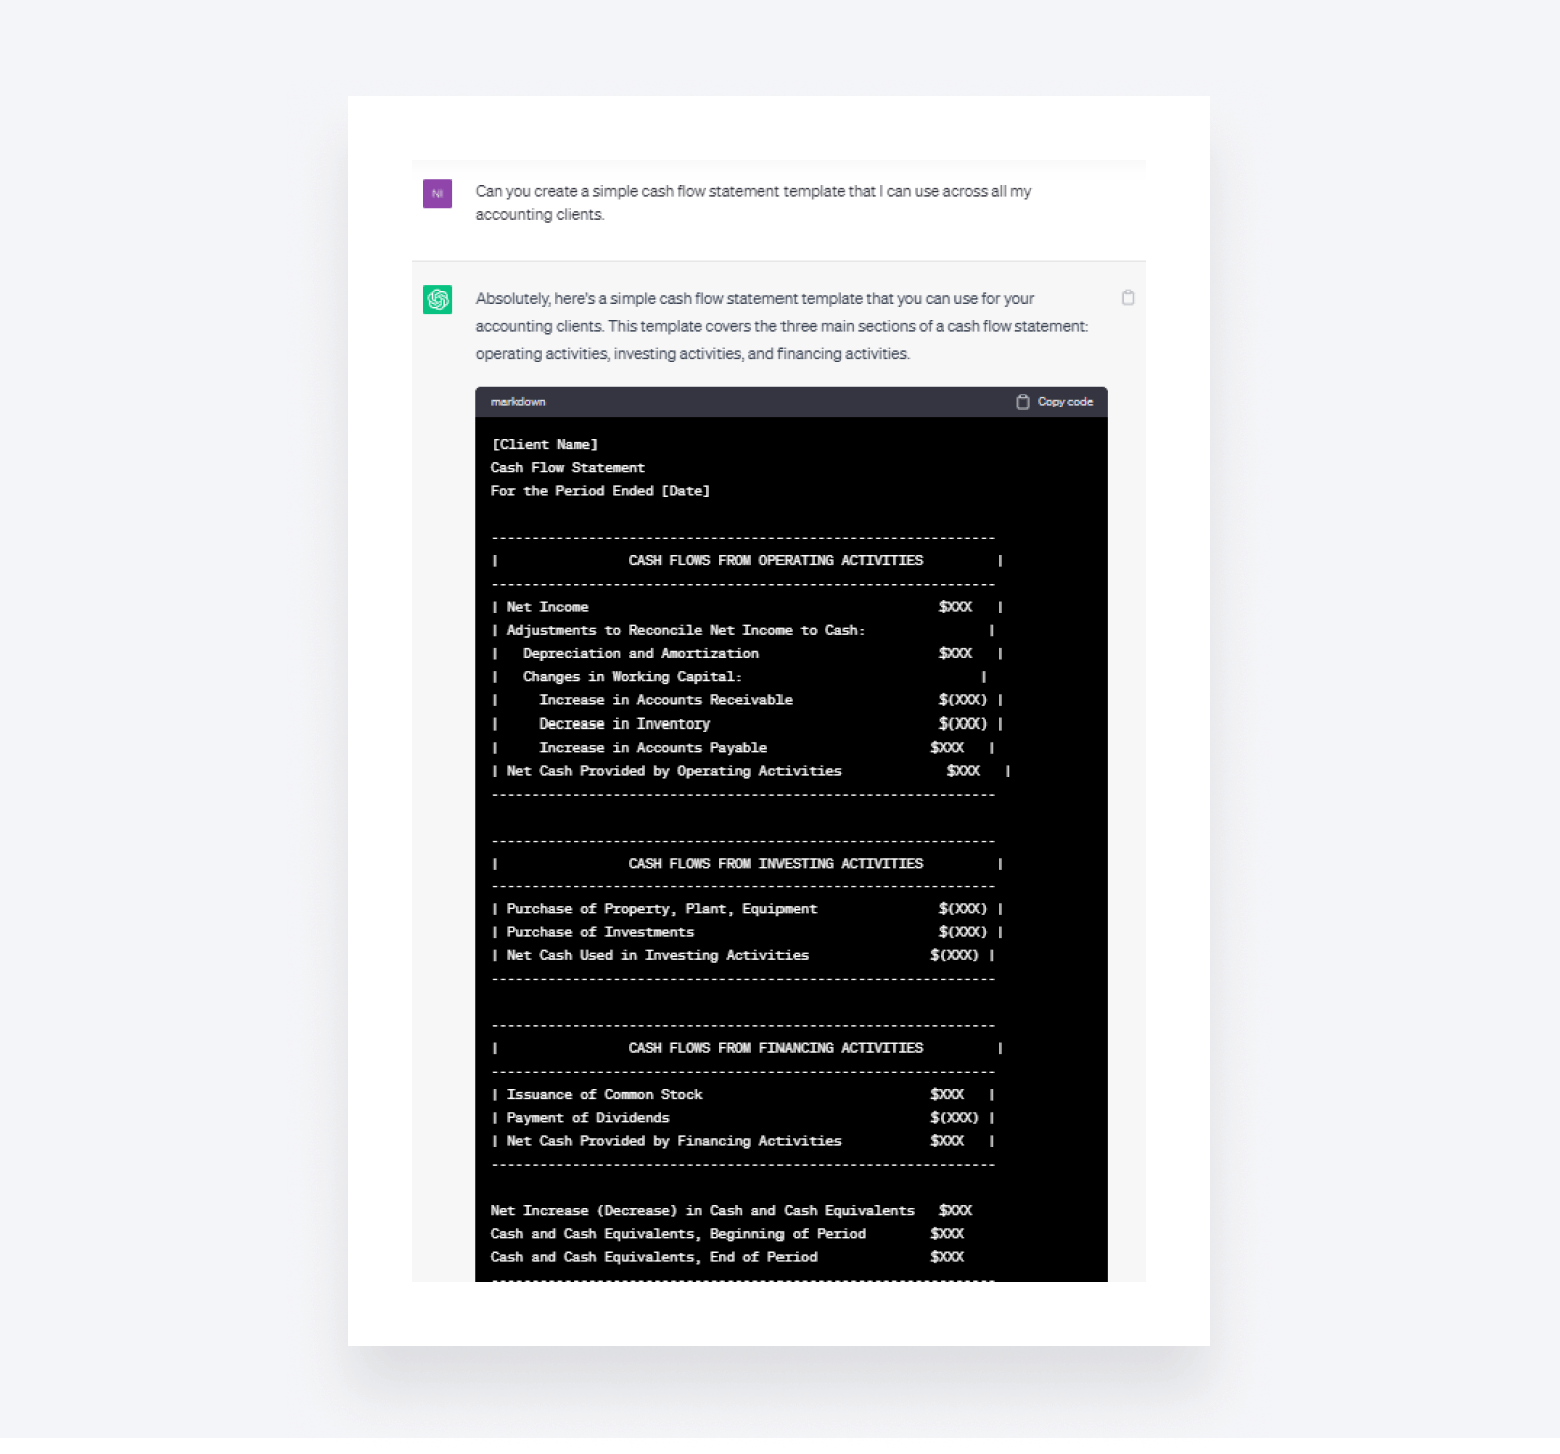 A screenshot of ChatGPT creating a cash flow statement template.